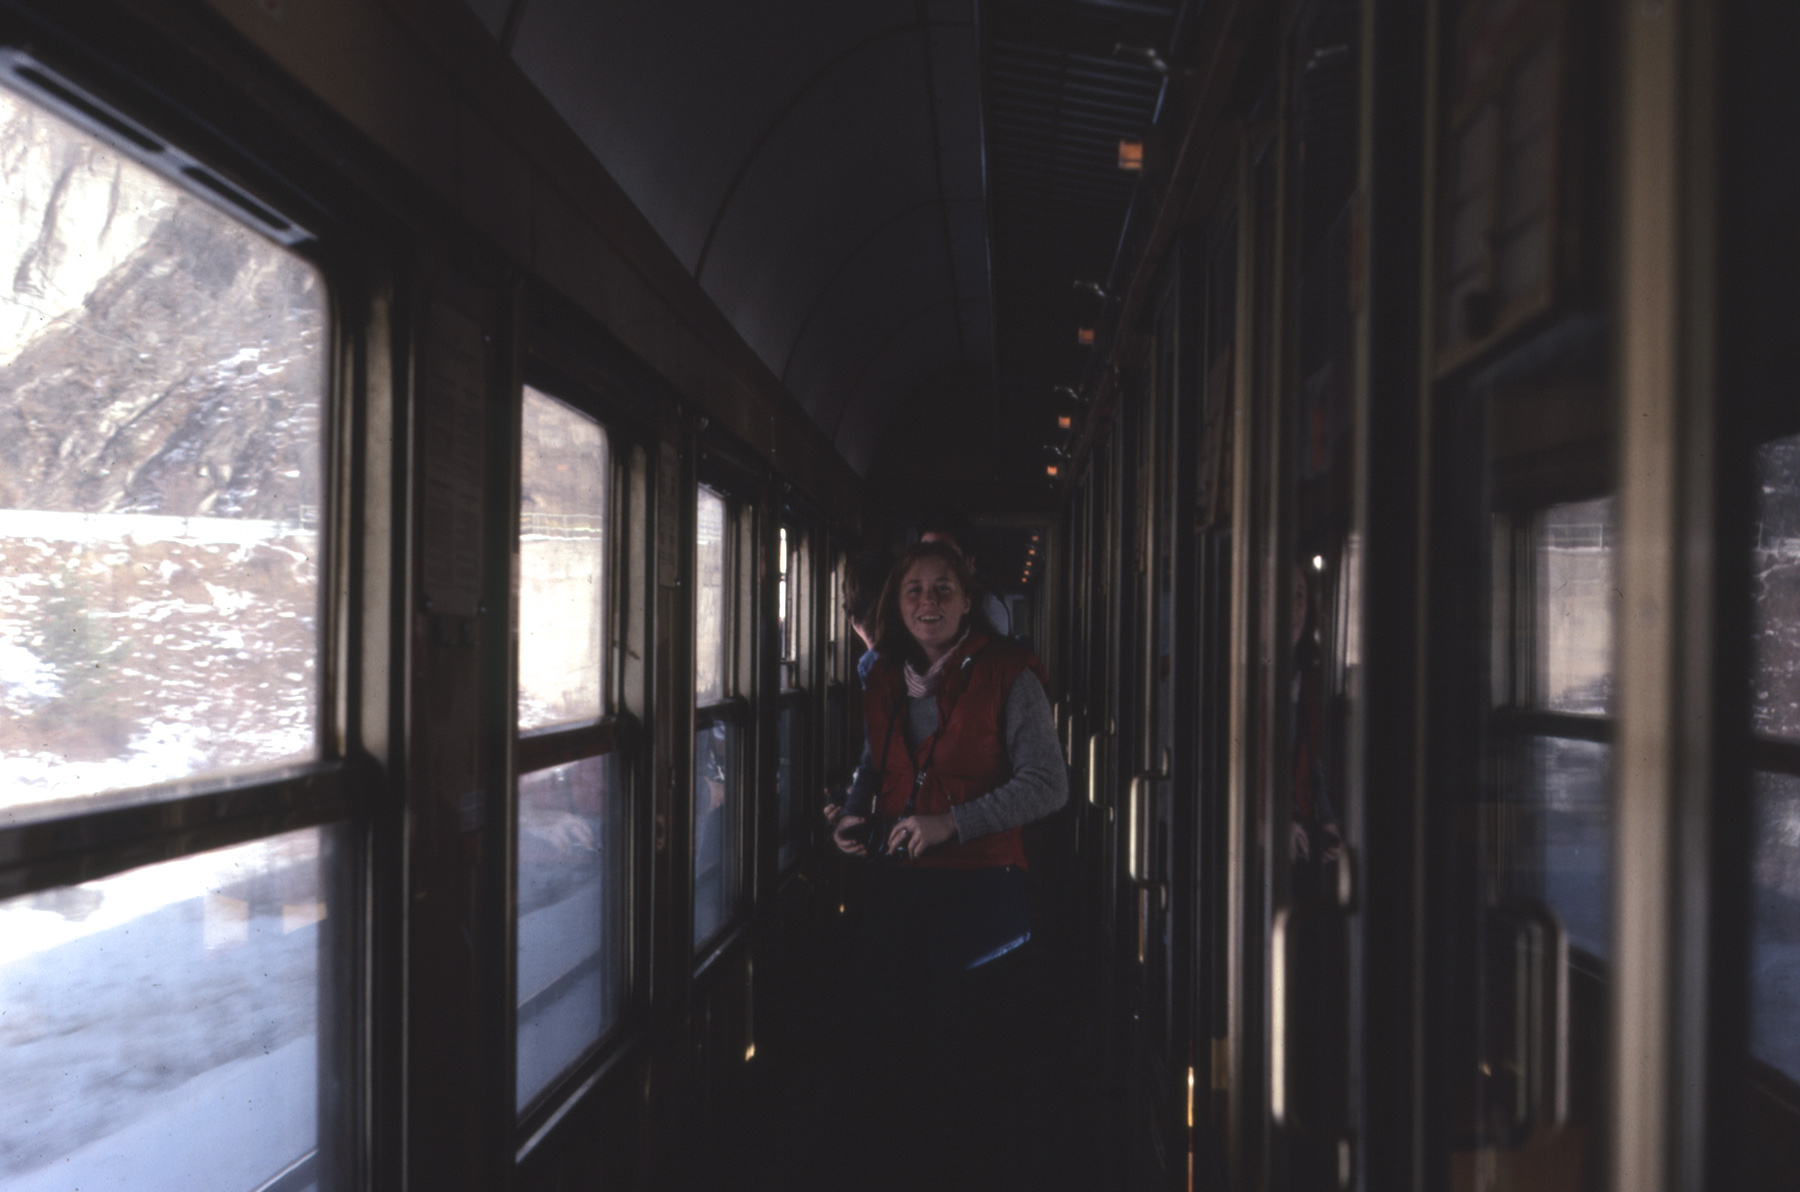  "We took a train through the Alps." 